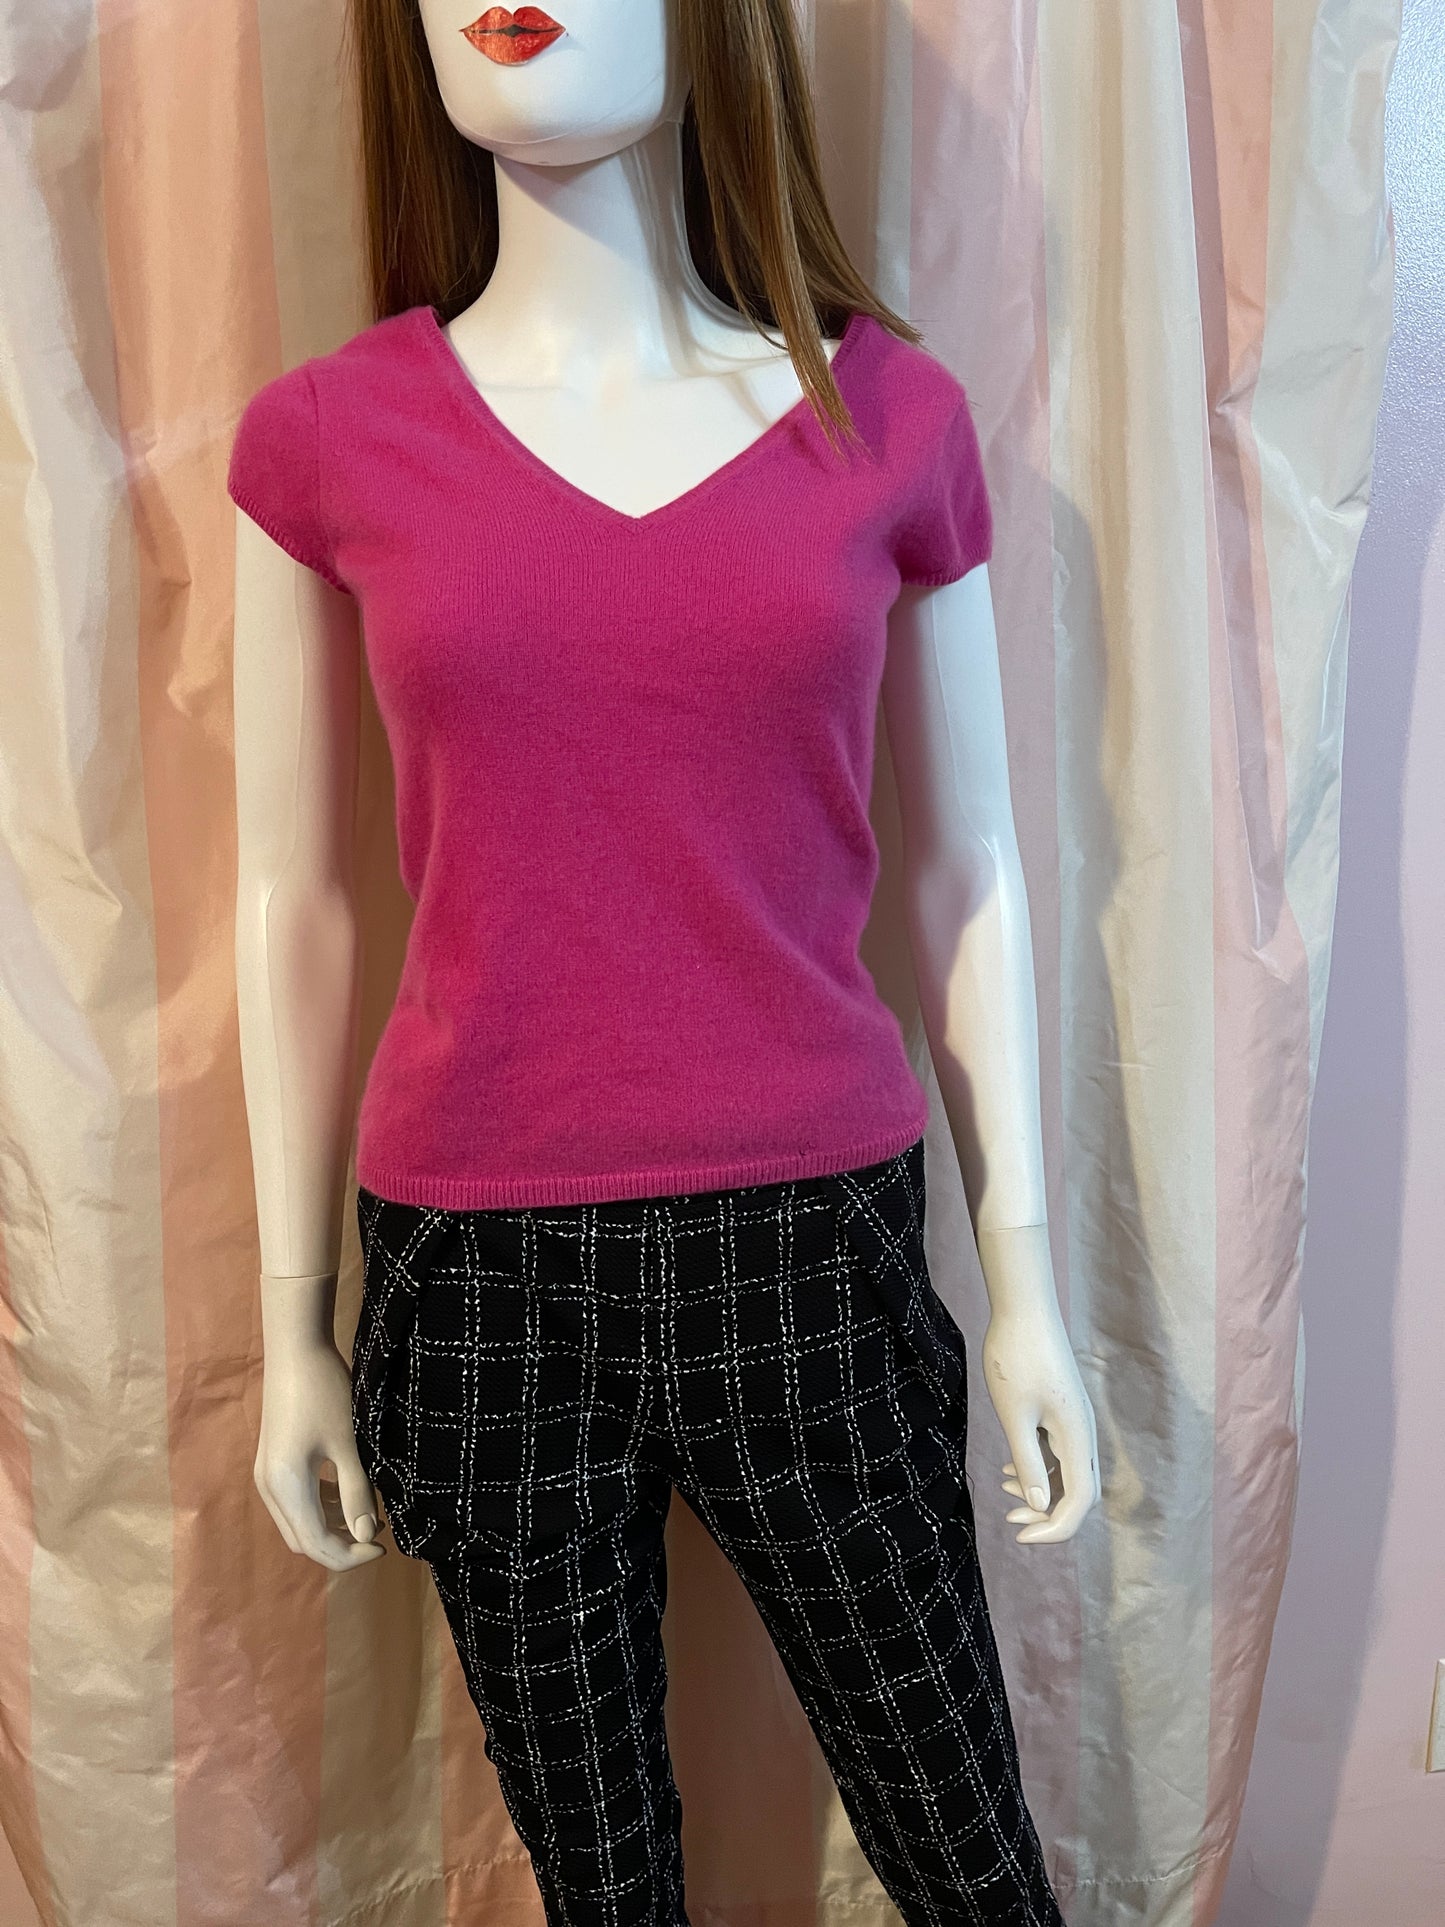 Hot Pink Fuschia Cashmere 100% Sweater & Black Pants